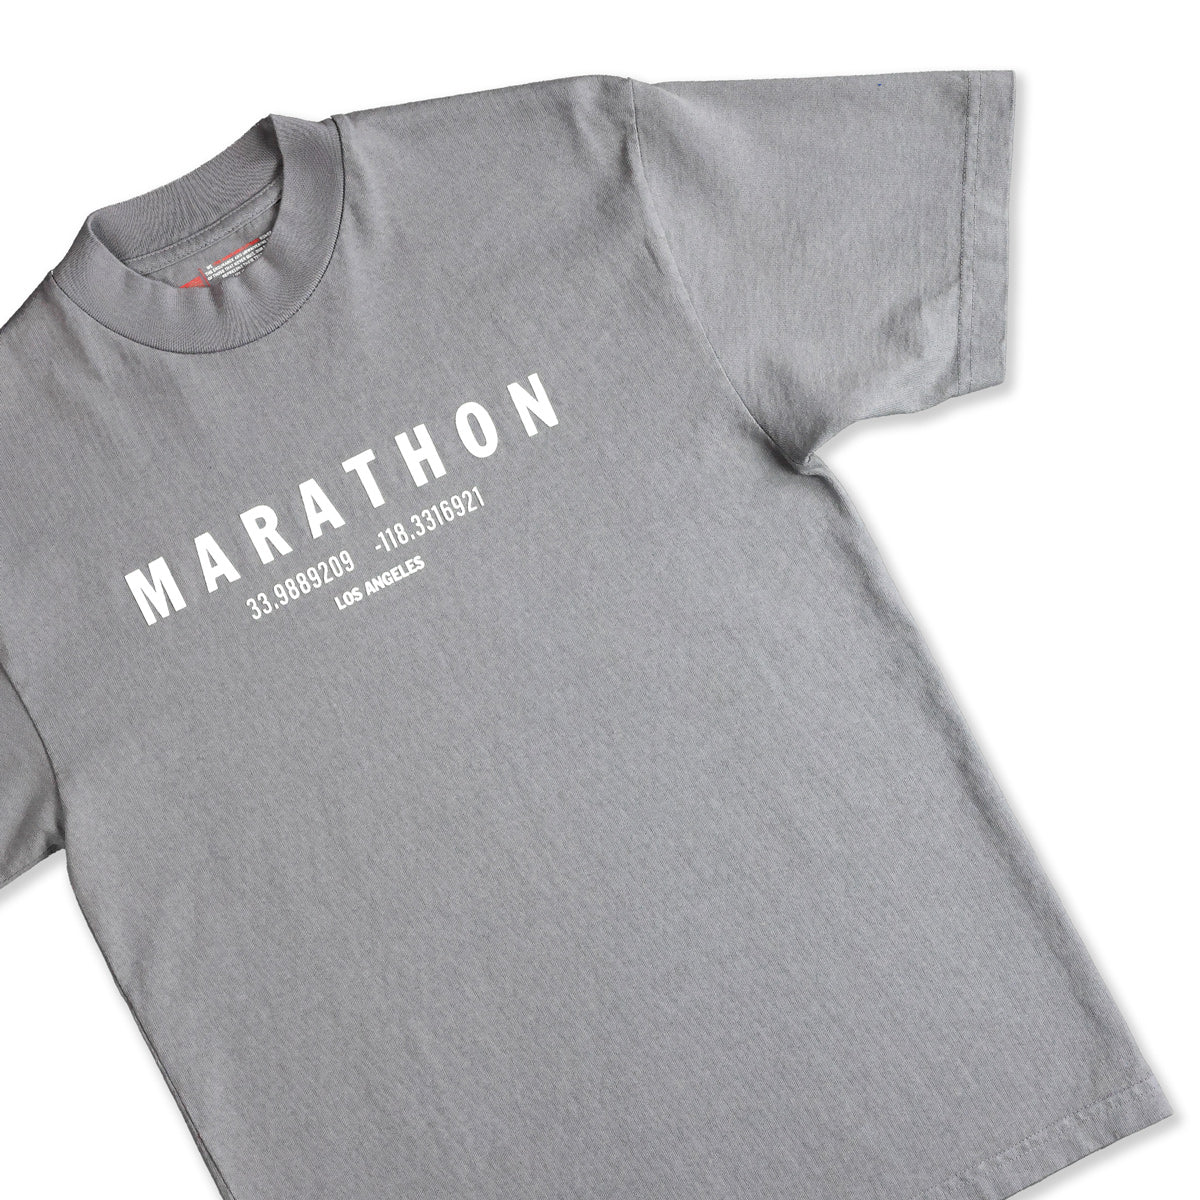 Marathon Foundation T-Shirt - Slate Grey/White - Detail 1